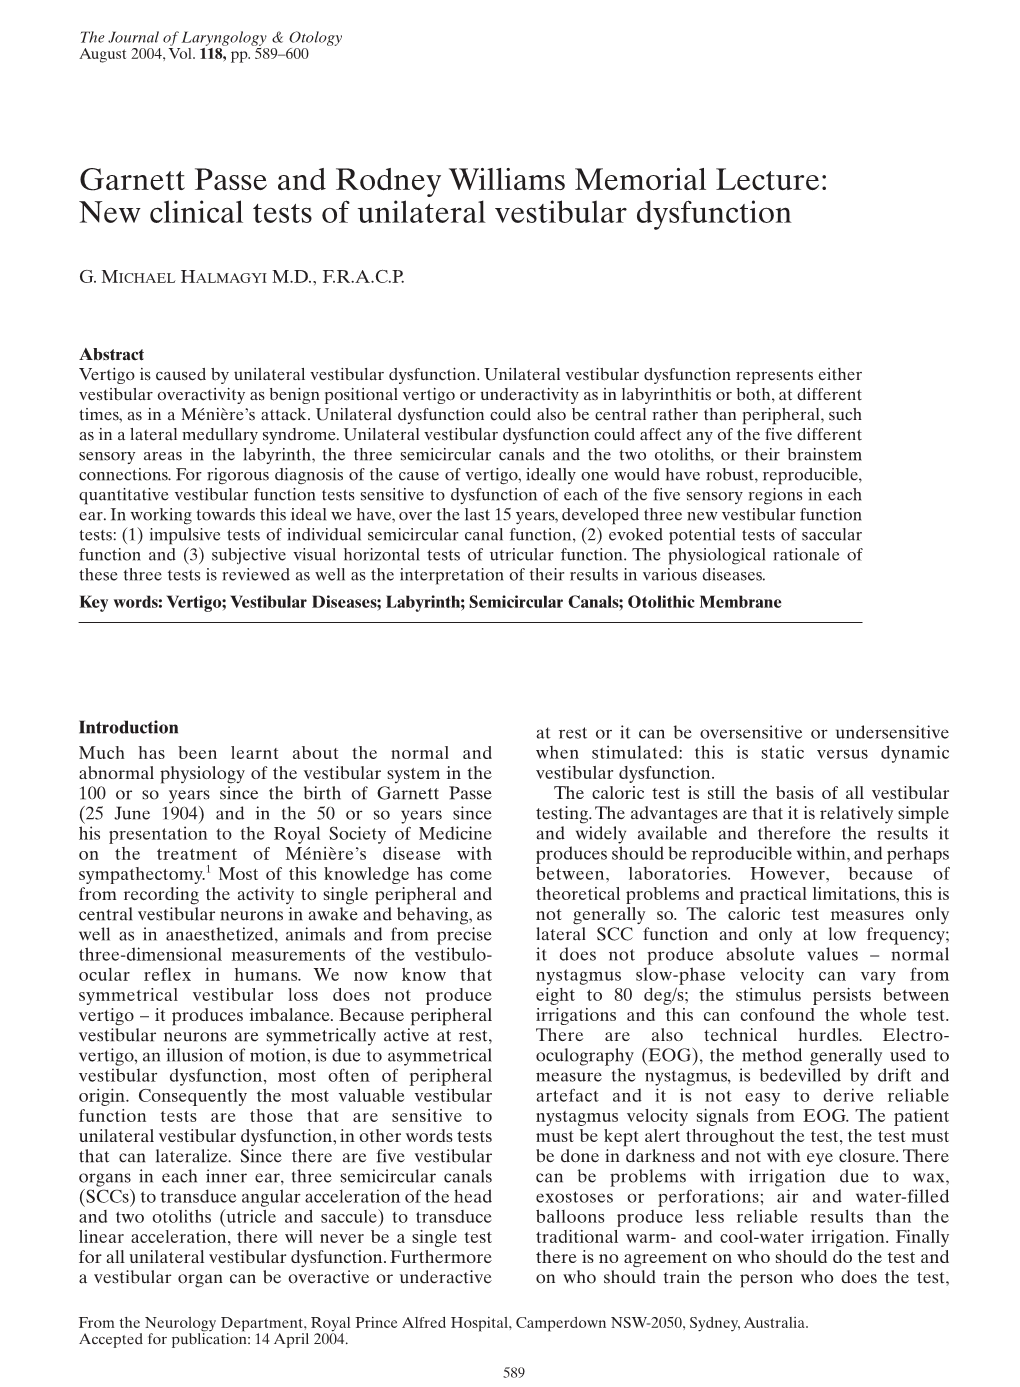 New Clinical Tests of Unilateral Vestibular Dysfunction